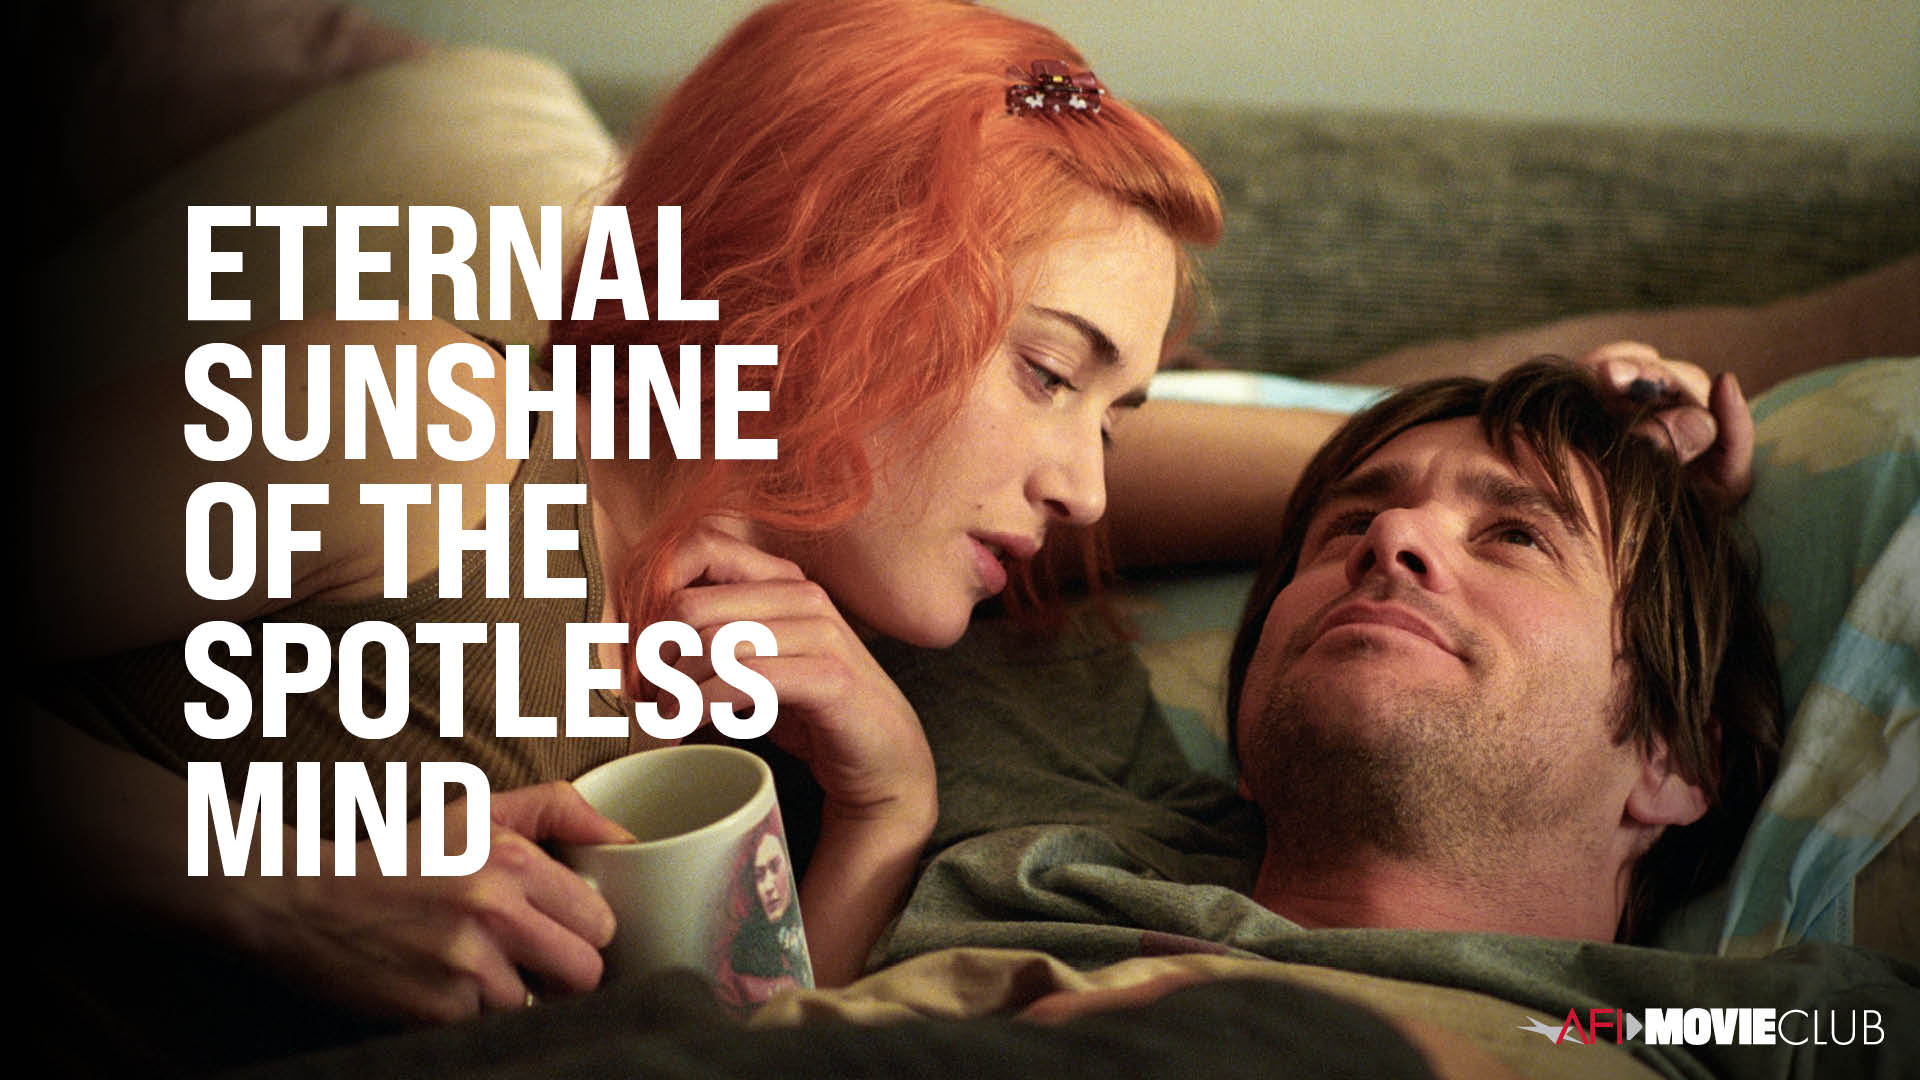 Eternal Sunshine of the Spotless Mind Film Still - Jim Carrey and Kate Winslet